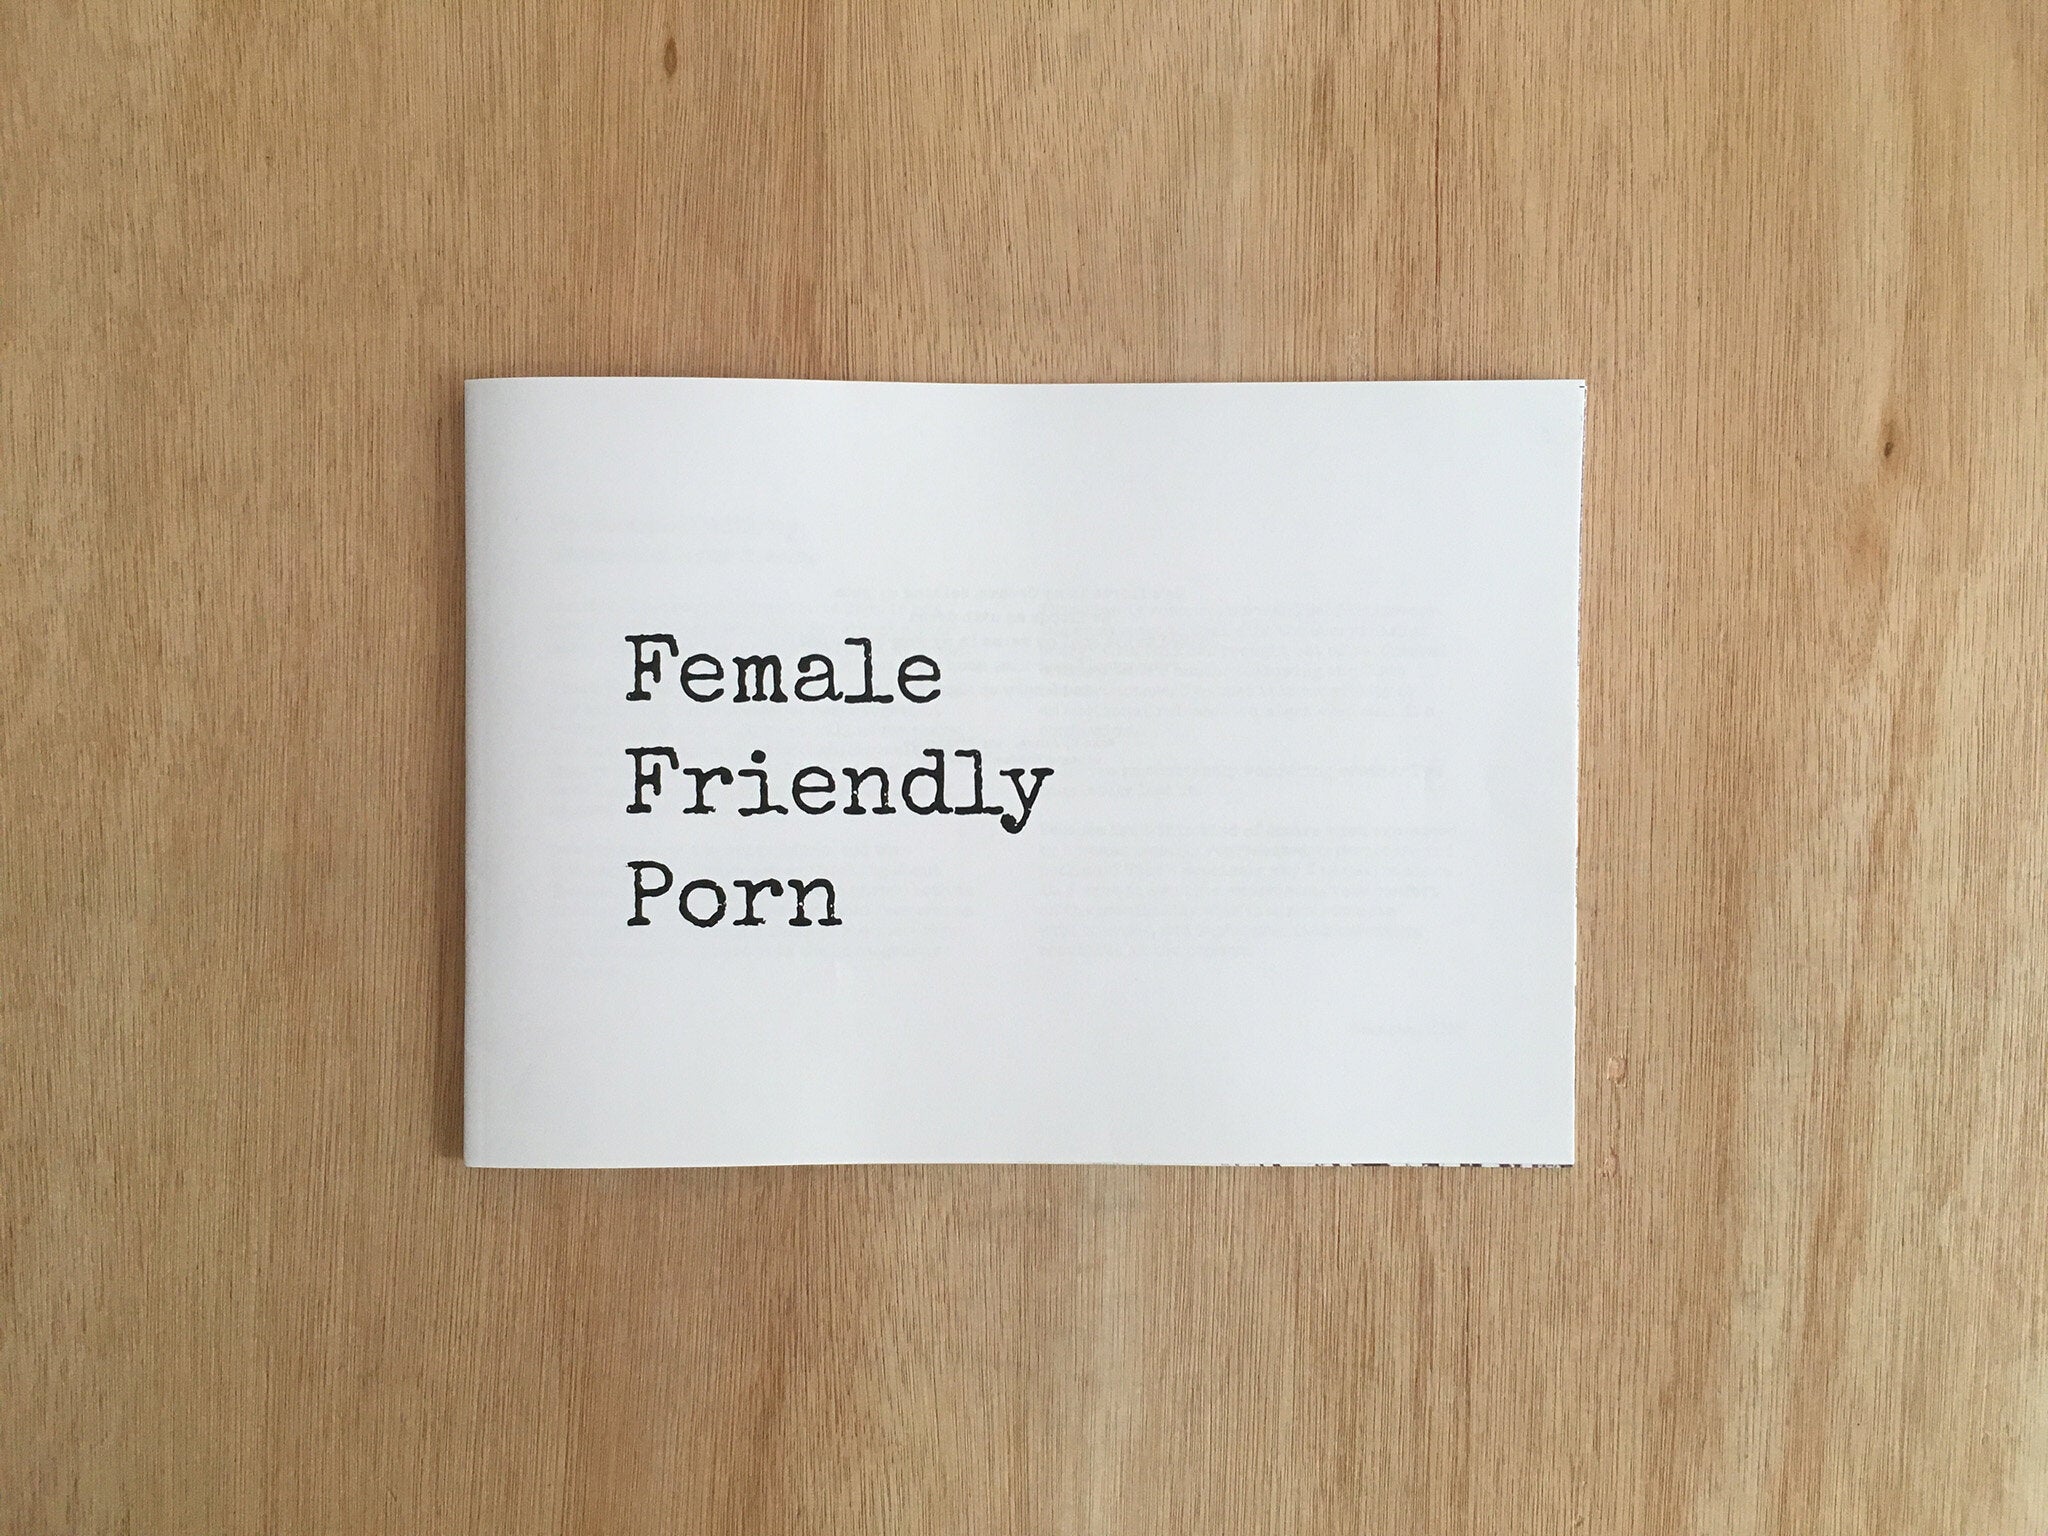 P O R N Female Friendly FEMALE FRIENDLY PORN by Natasha Natarajan – Good Press — good books & more